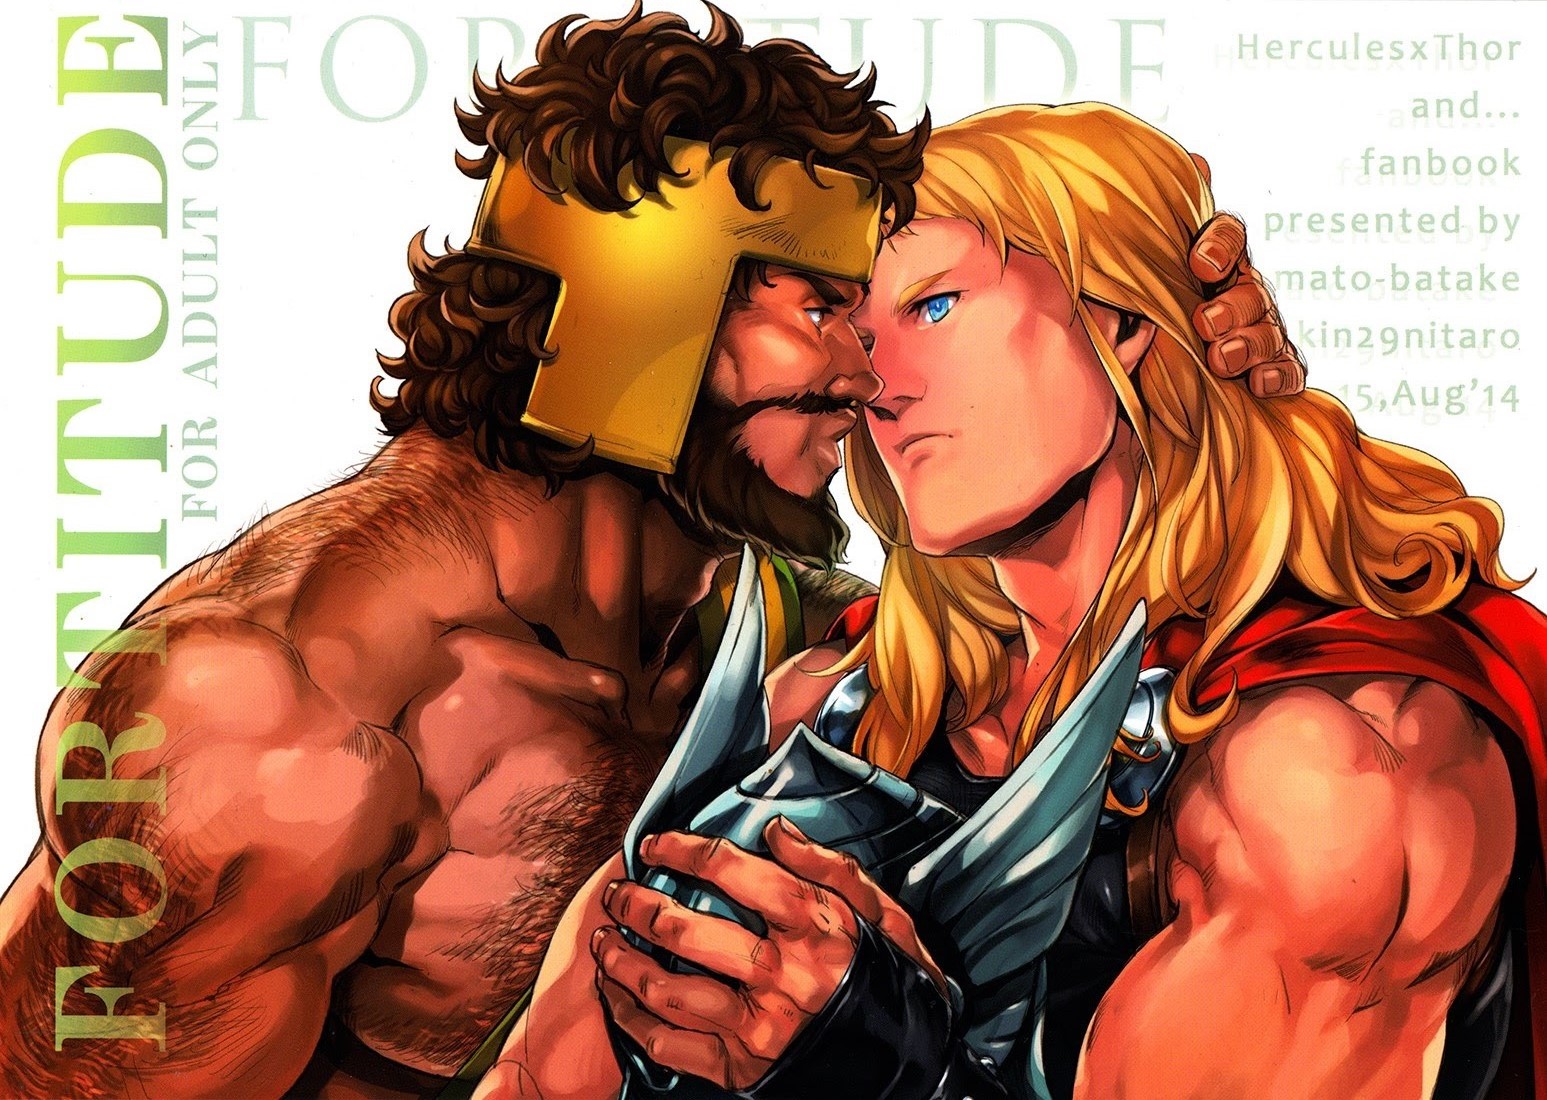 Pomatobatake ポマト畑 Kin29Nitaro Fortitude Hercules x Thor, Loki x Thor